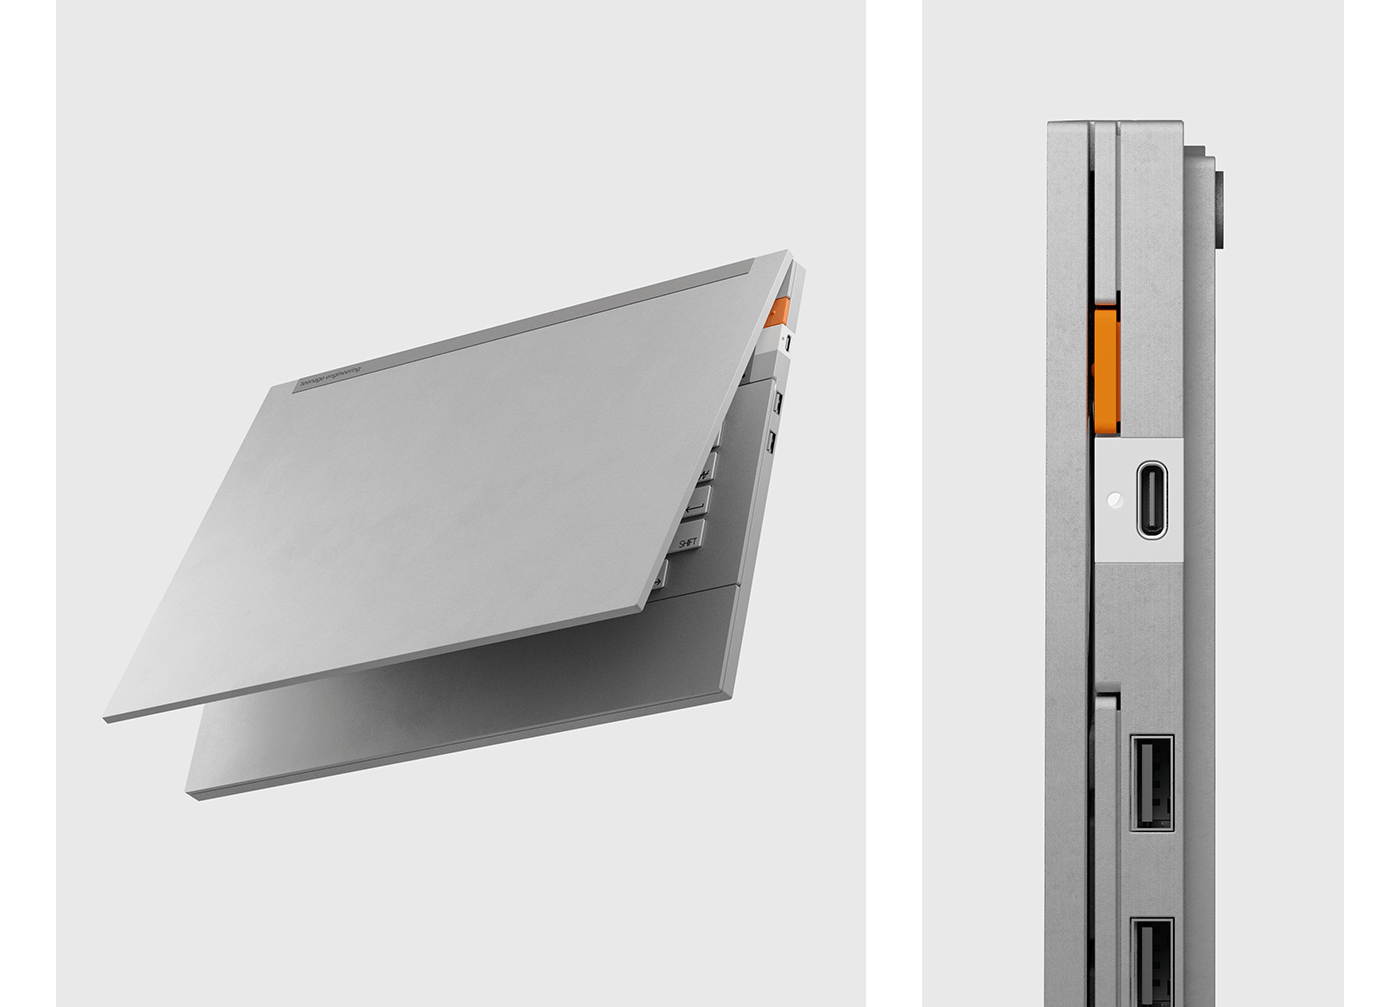 Laptop industrial design  musician details product design  concept brand identity ideation modular Teenageengineering